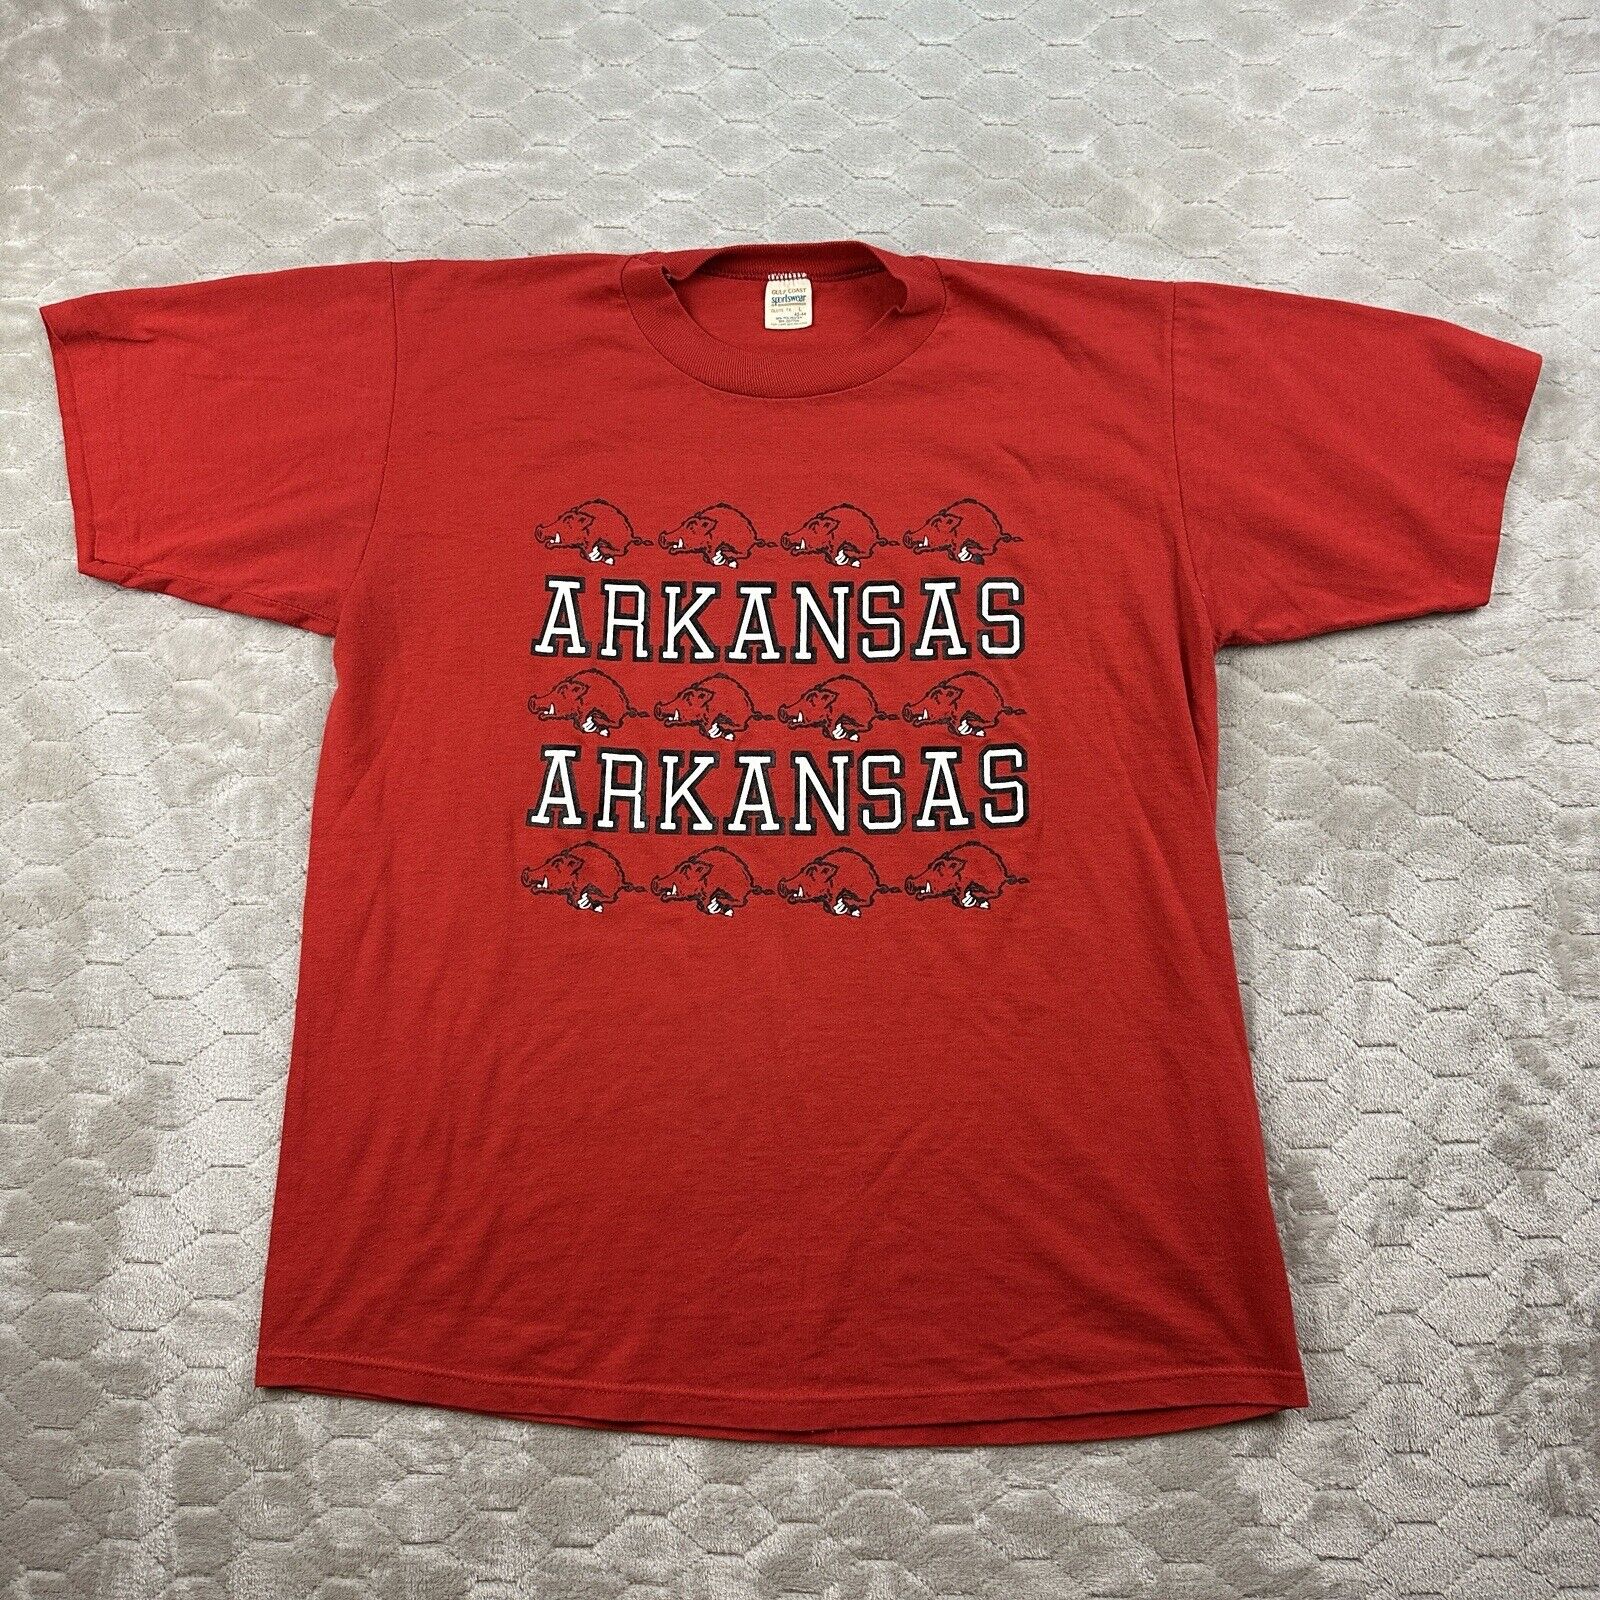 VTG 70s 80s Arkansas Razorbacks Shirt - Sz L - Gulf Coast Sportswear NCAA Look